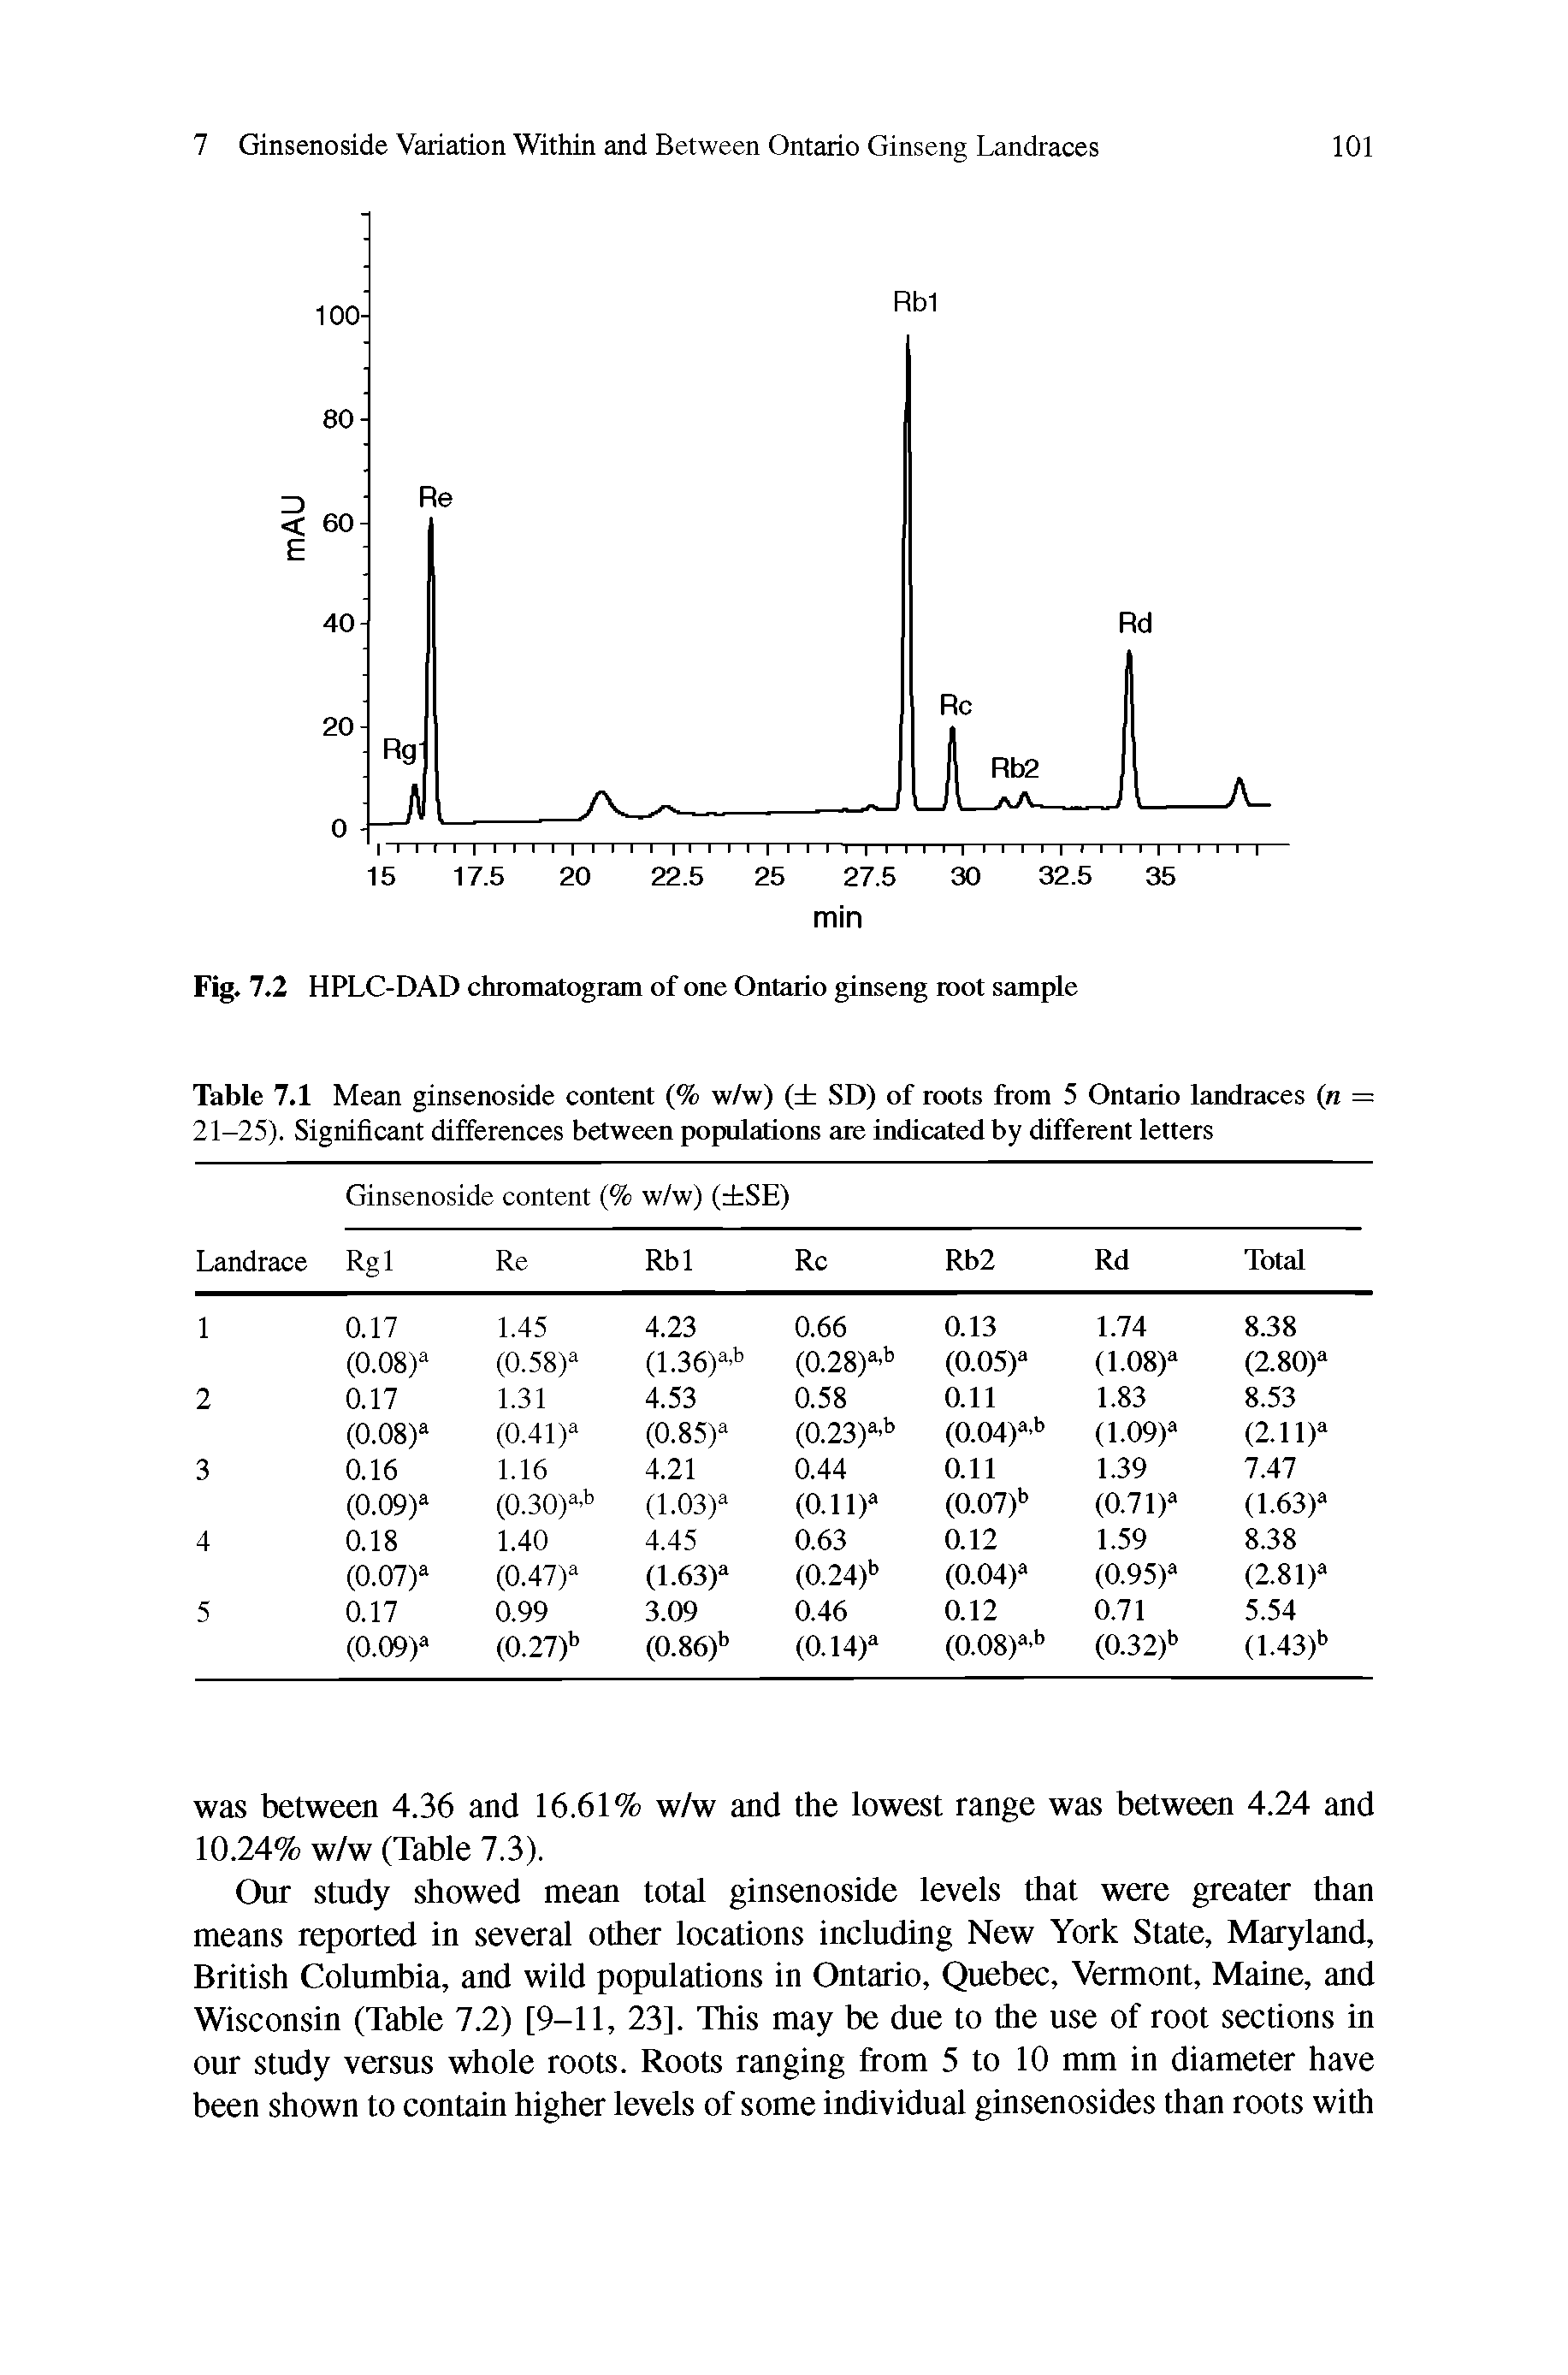 Fig. 7.2 HPLC-DAD chromatogram of one Ontario ginseng root sample...